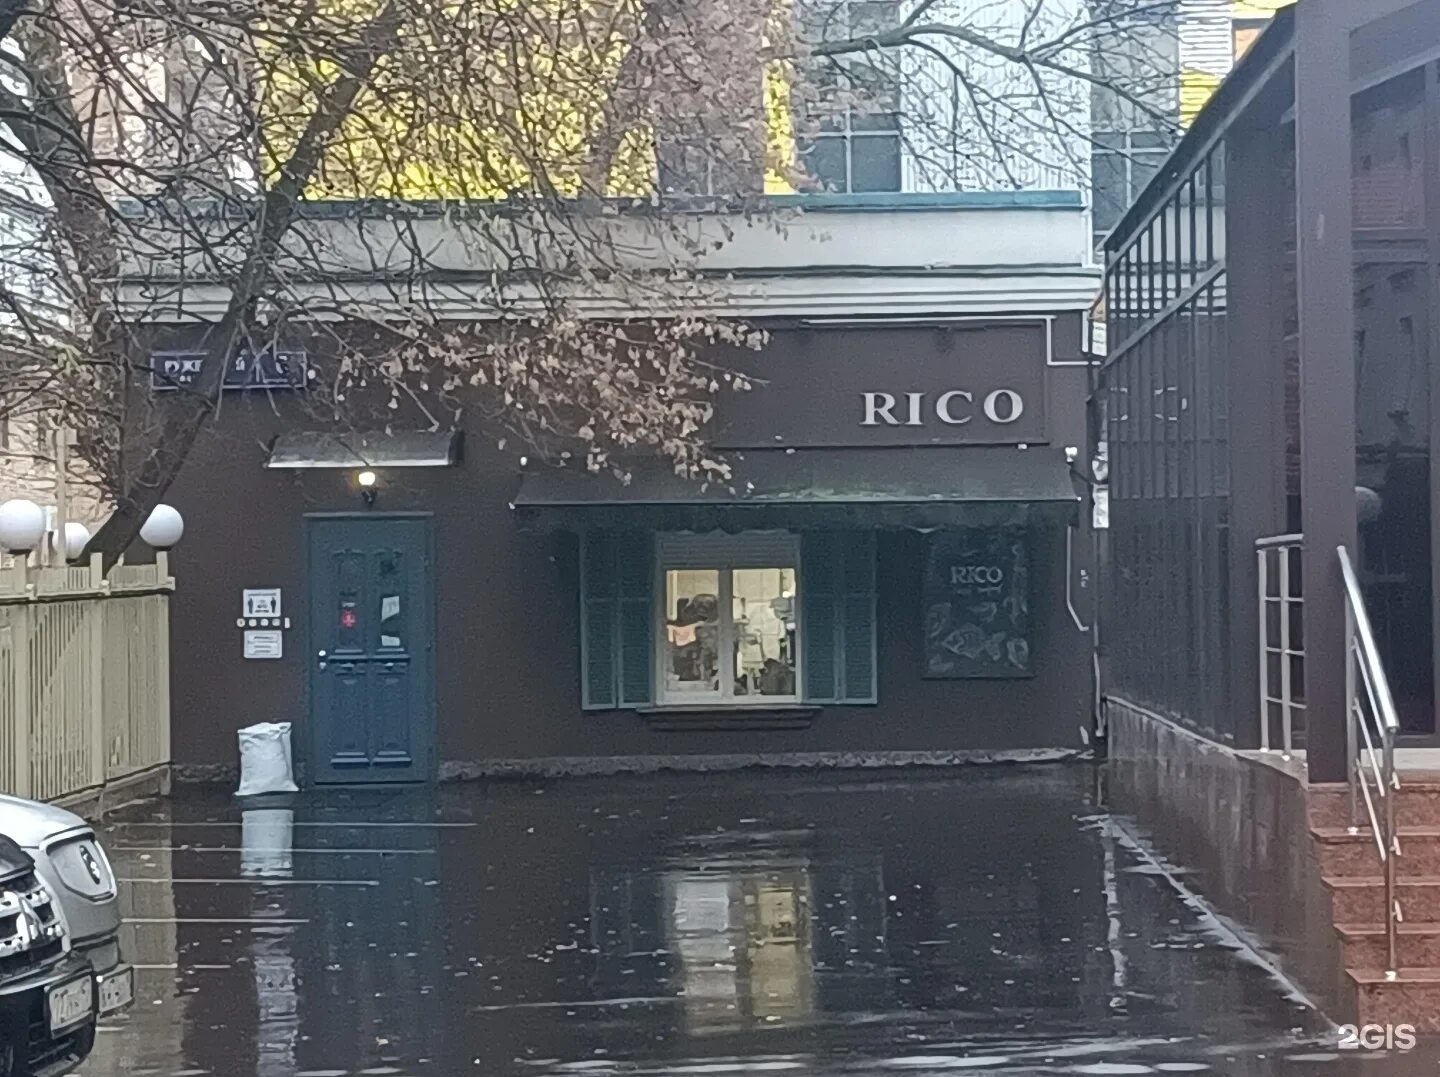 Ресторан Рико ружейный переулок. Rico ресторан Москва. Рико ресторан Москва ружейный переулок меню. Рикко ресторан Москва.